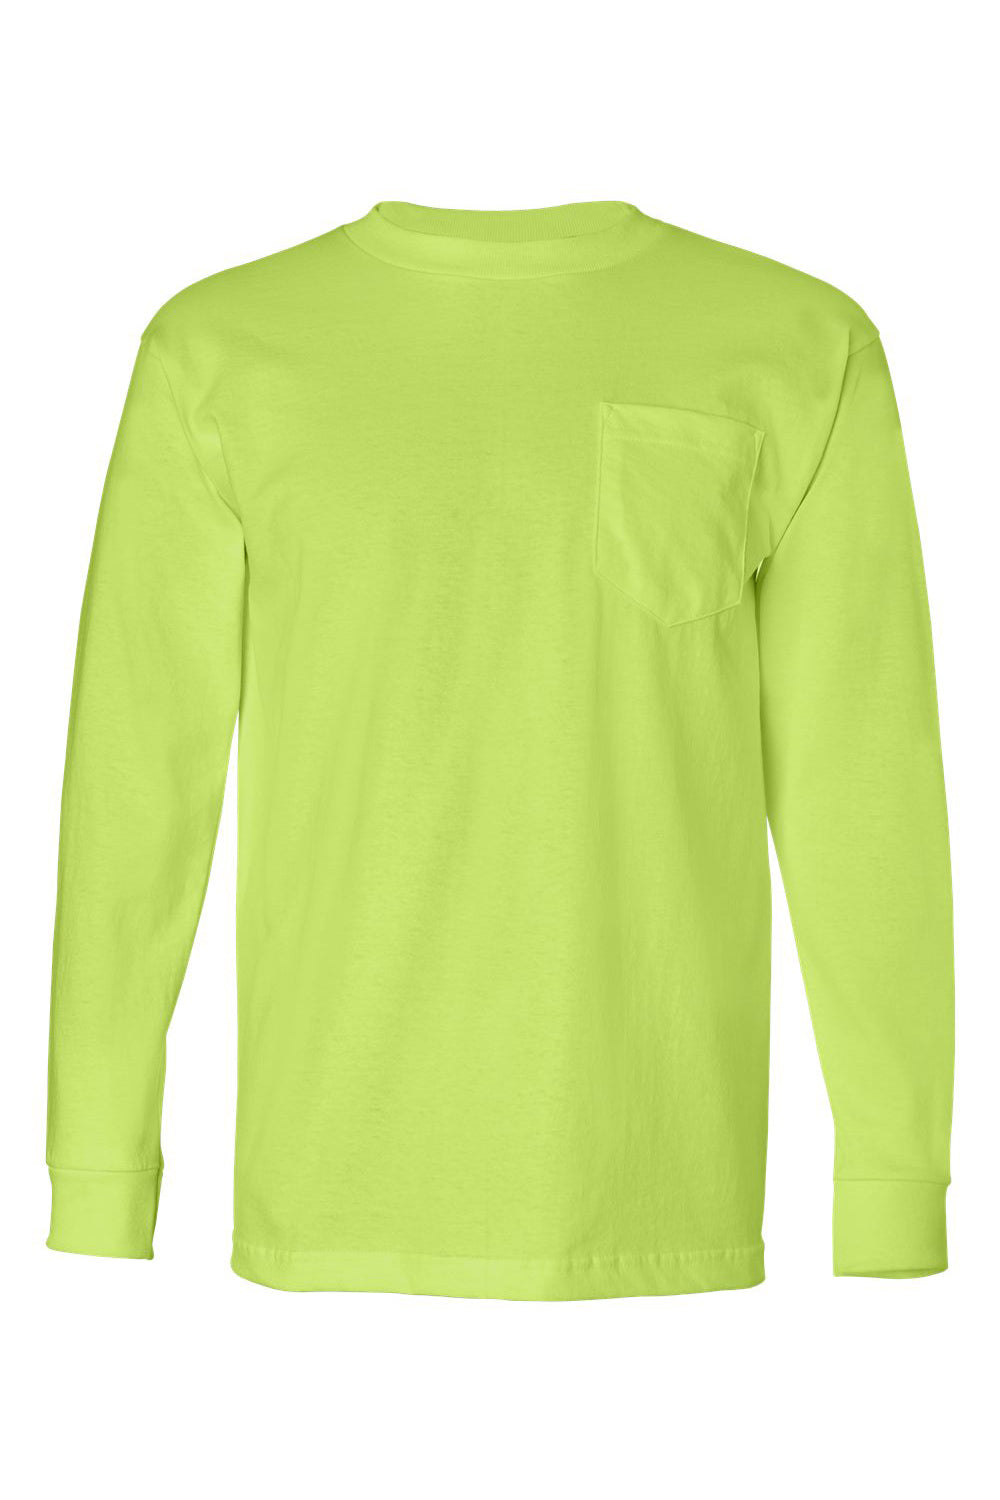 Bayside BA8100 Mens USA Made Long Sleeve Crewneck T-Shirt w/ Pocket Lime Green Flat Front